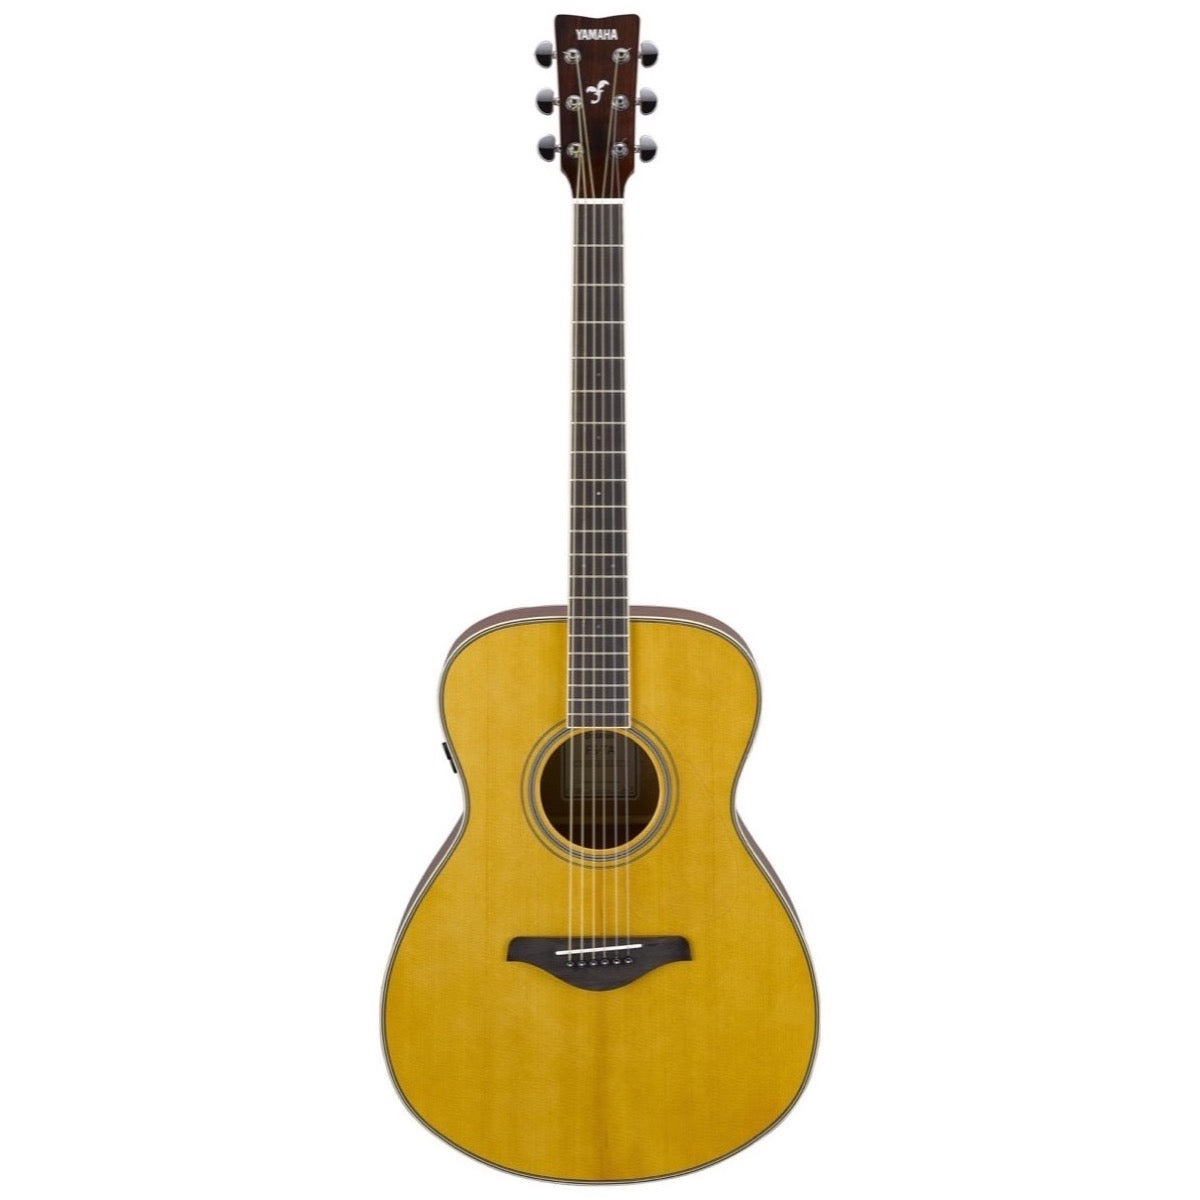 Yamaha FS-TA Concert TransAcoustic Acoustic-Electric Guitar, Vintage Tint